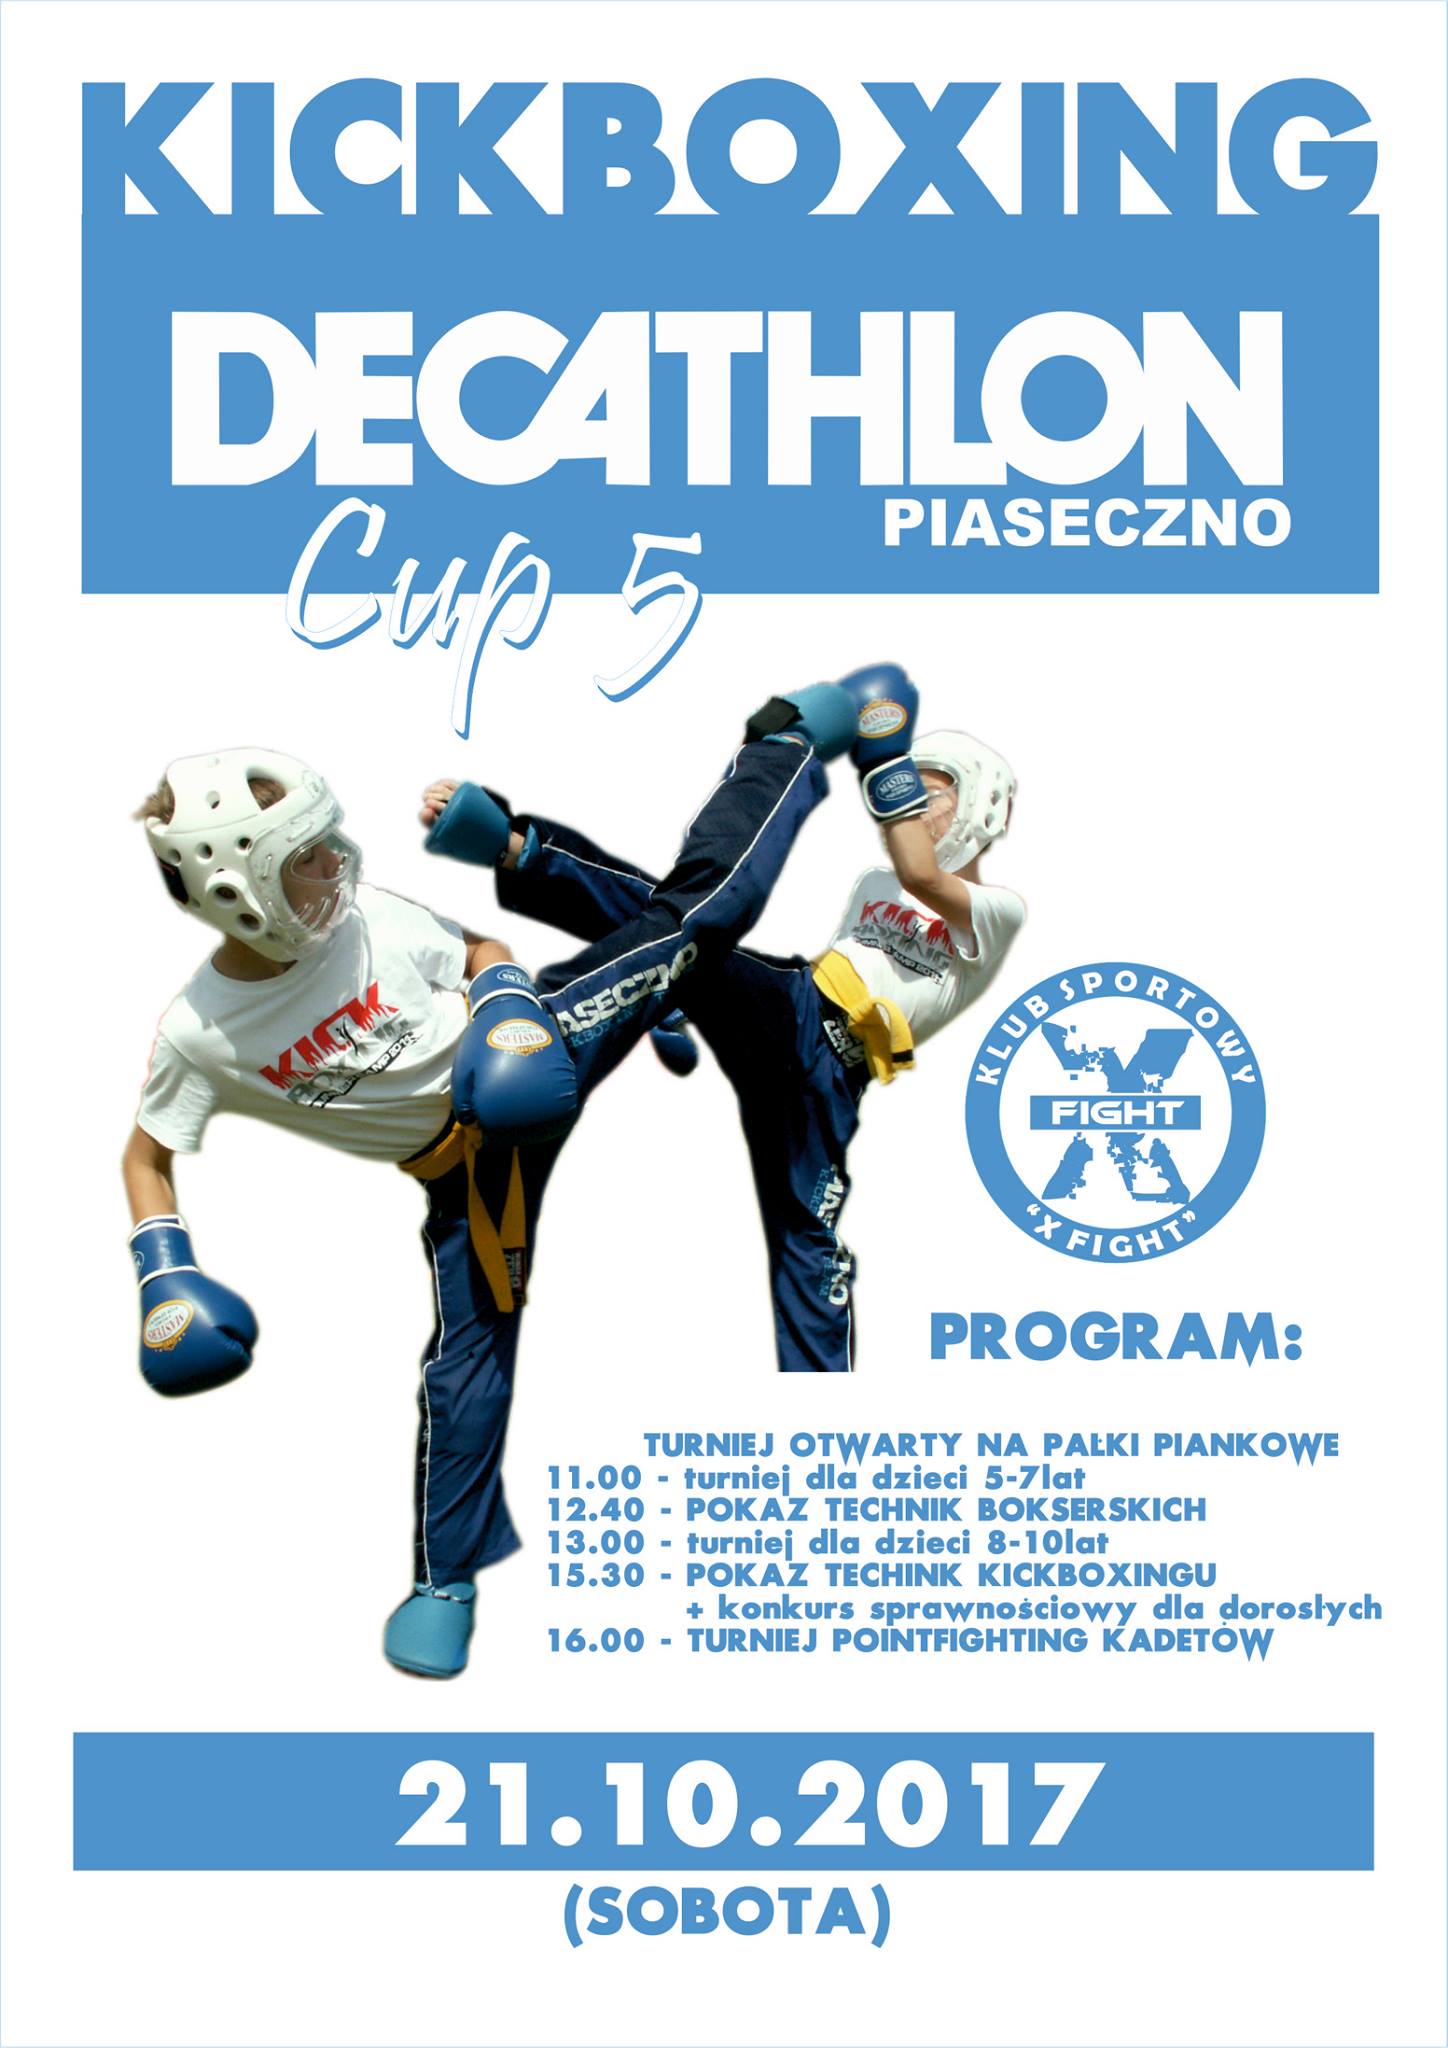 KICKBOXING DECATHLON CUP 2017